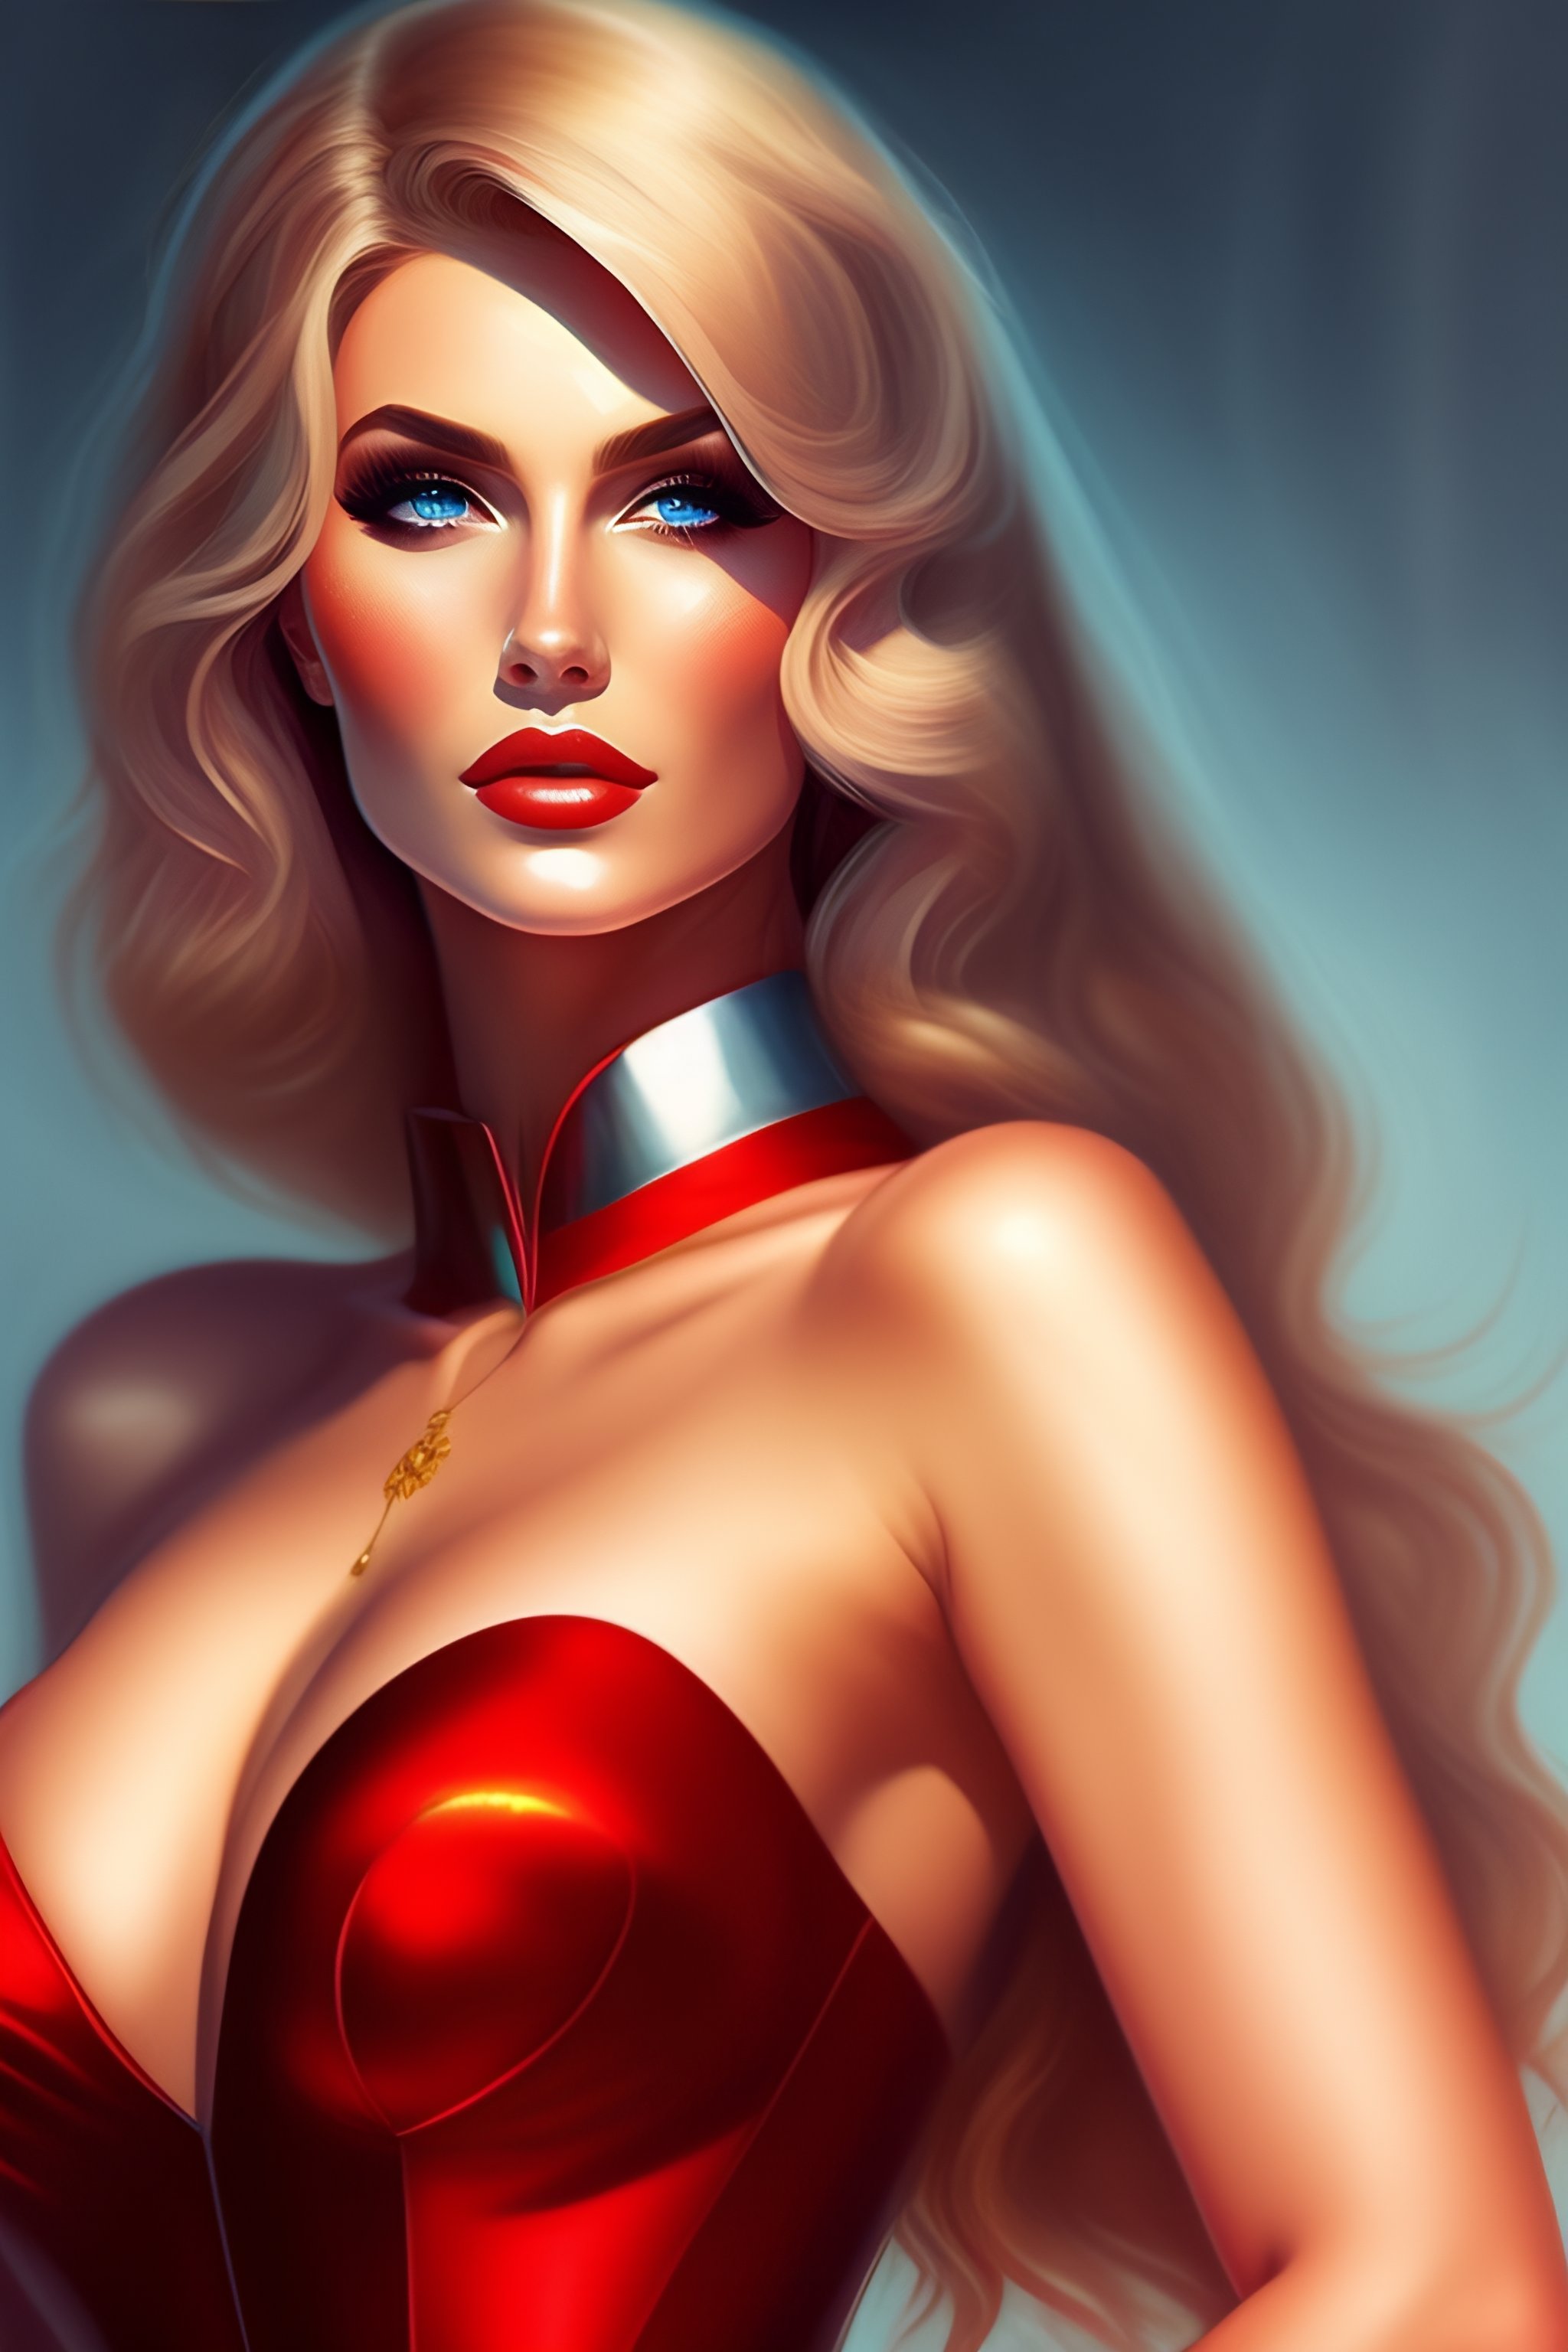 Lexica - Beautiful woman, heavy chest, tight red dress, elegant, radiant,  artstation, concept art, blonde hair, white skin, blue eyes, zaftig